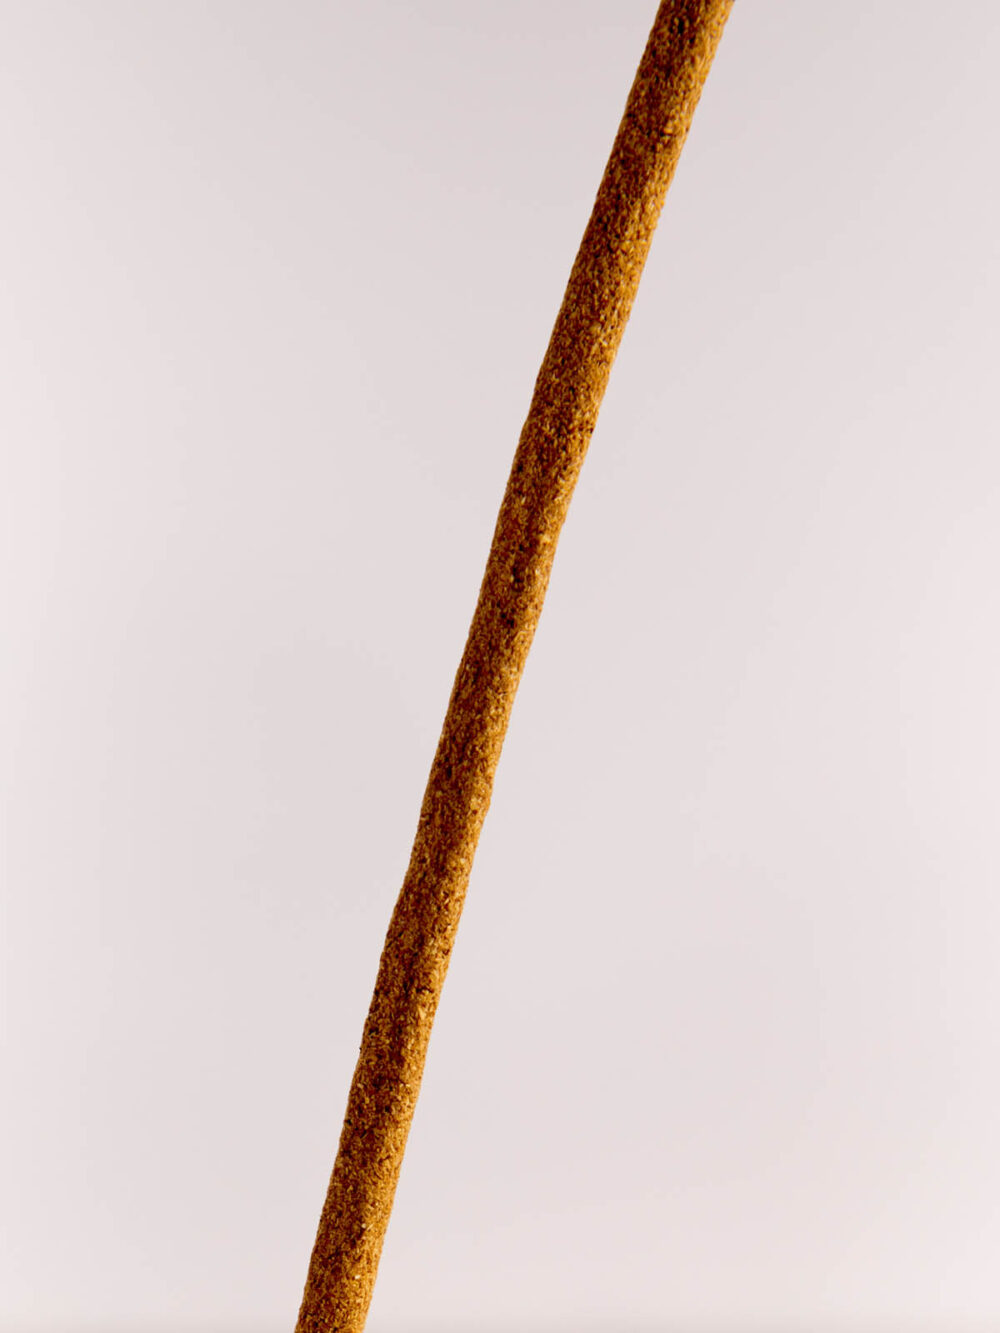 Hand Rolled Palo Santo Incense Sticks by Cedar & Myrrh incense stick